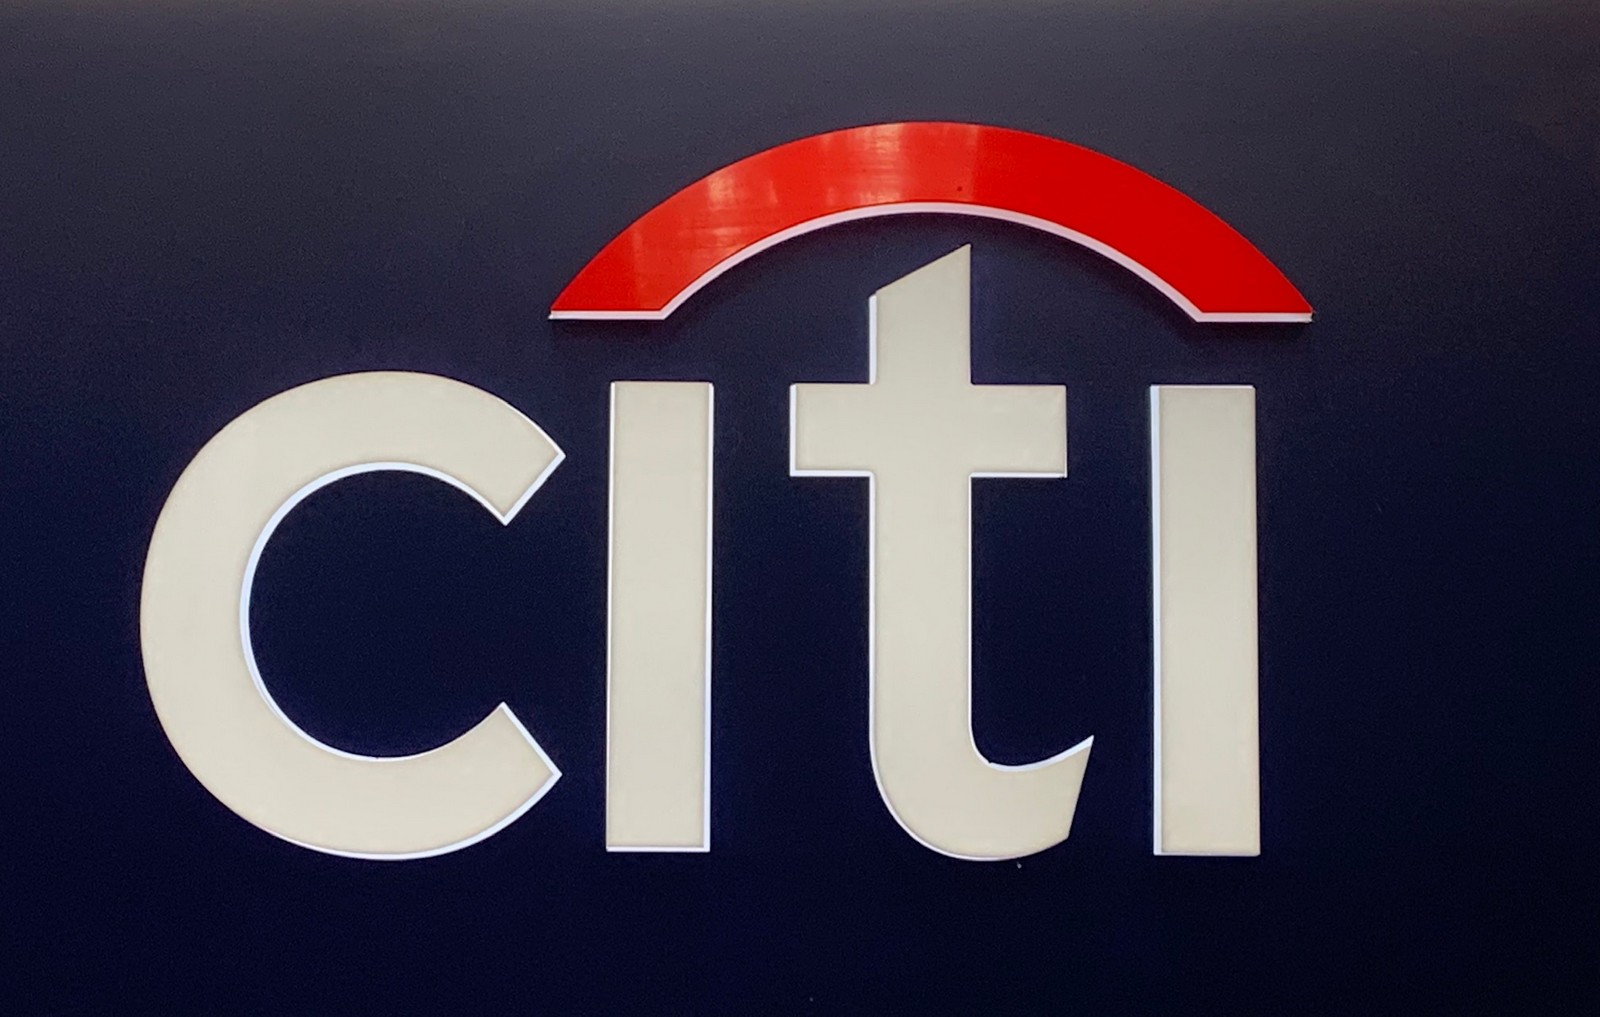 Citi Premier Credit Card Review